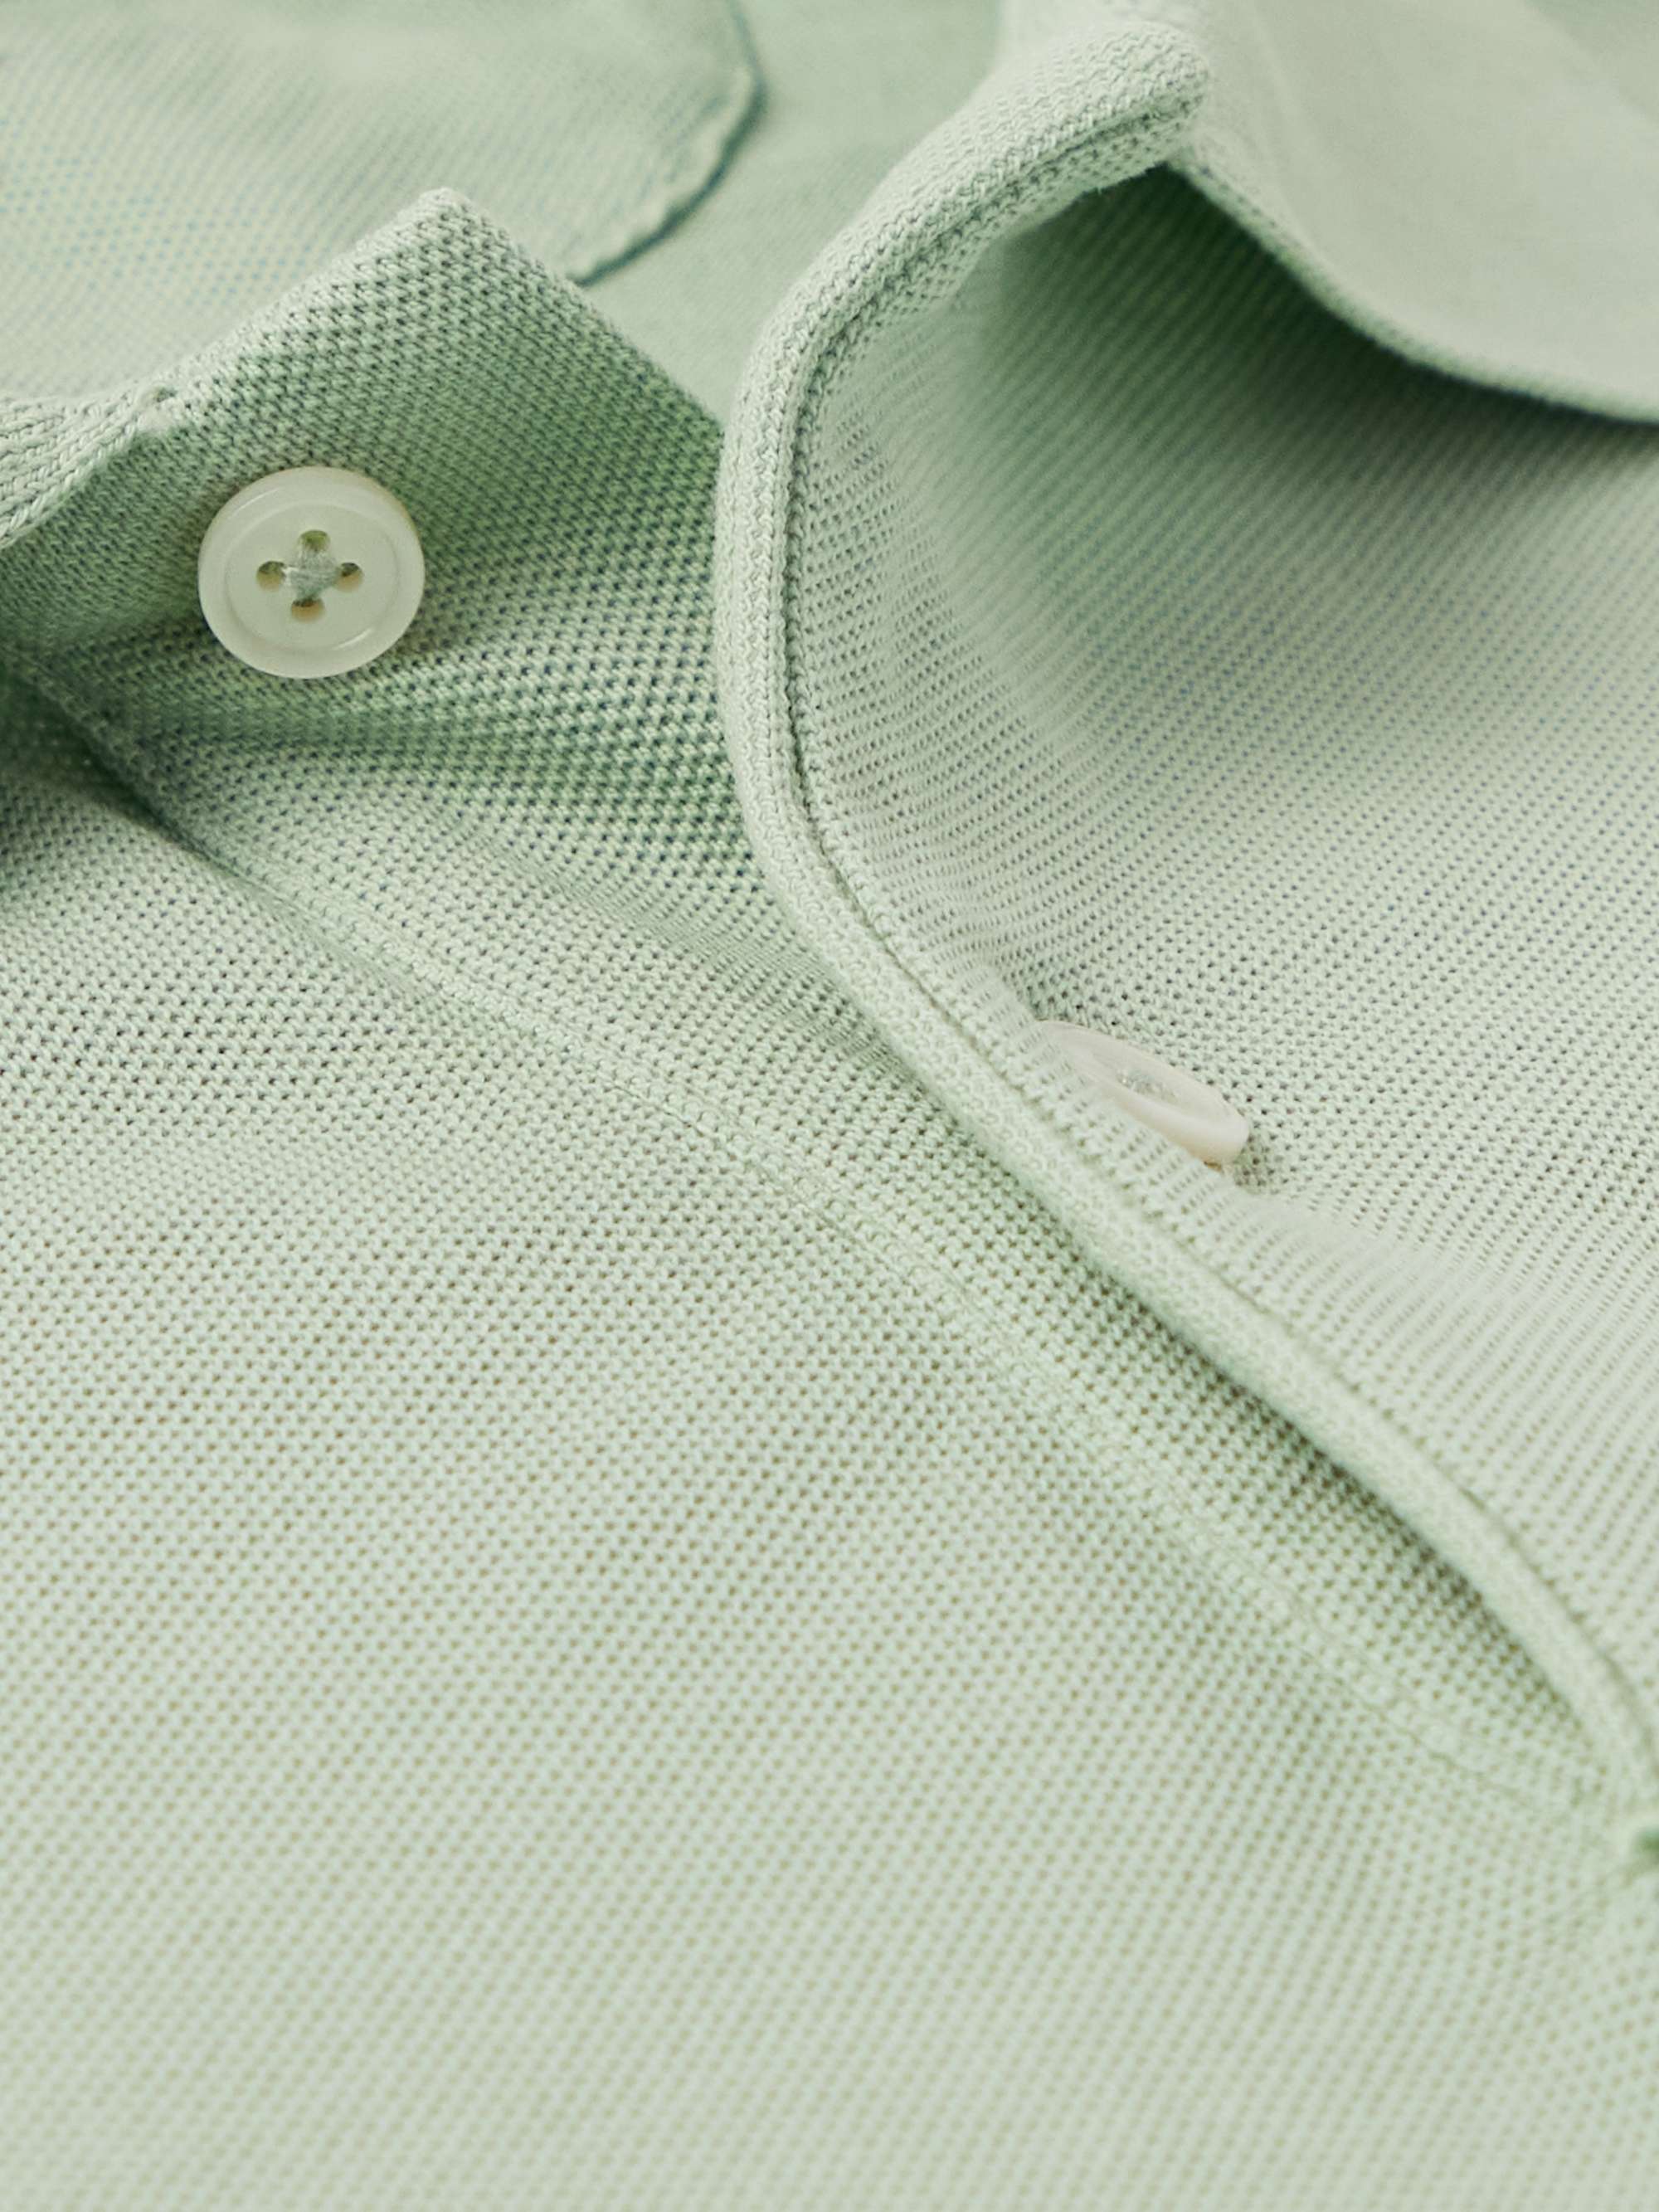 TOM FORD Cotton-Piqué Polo Shirt